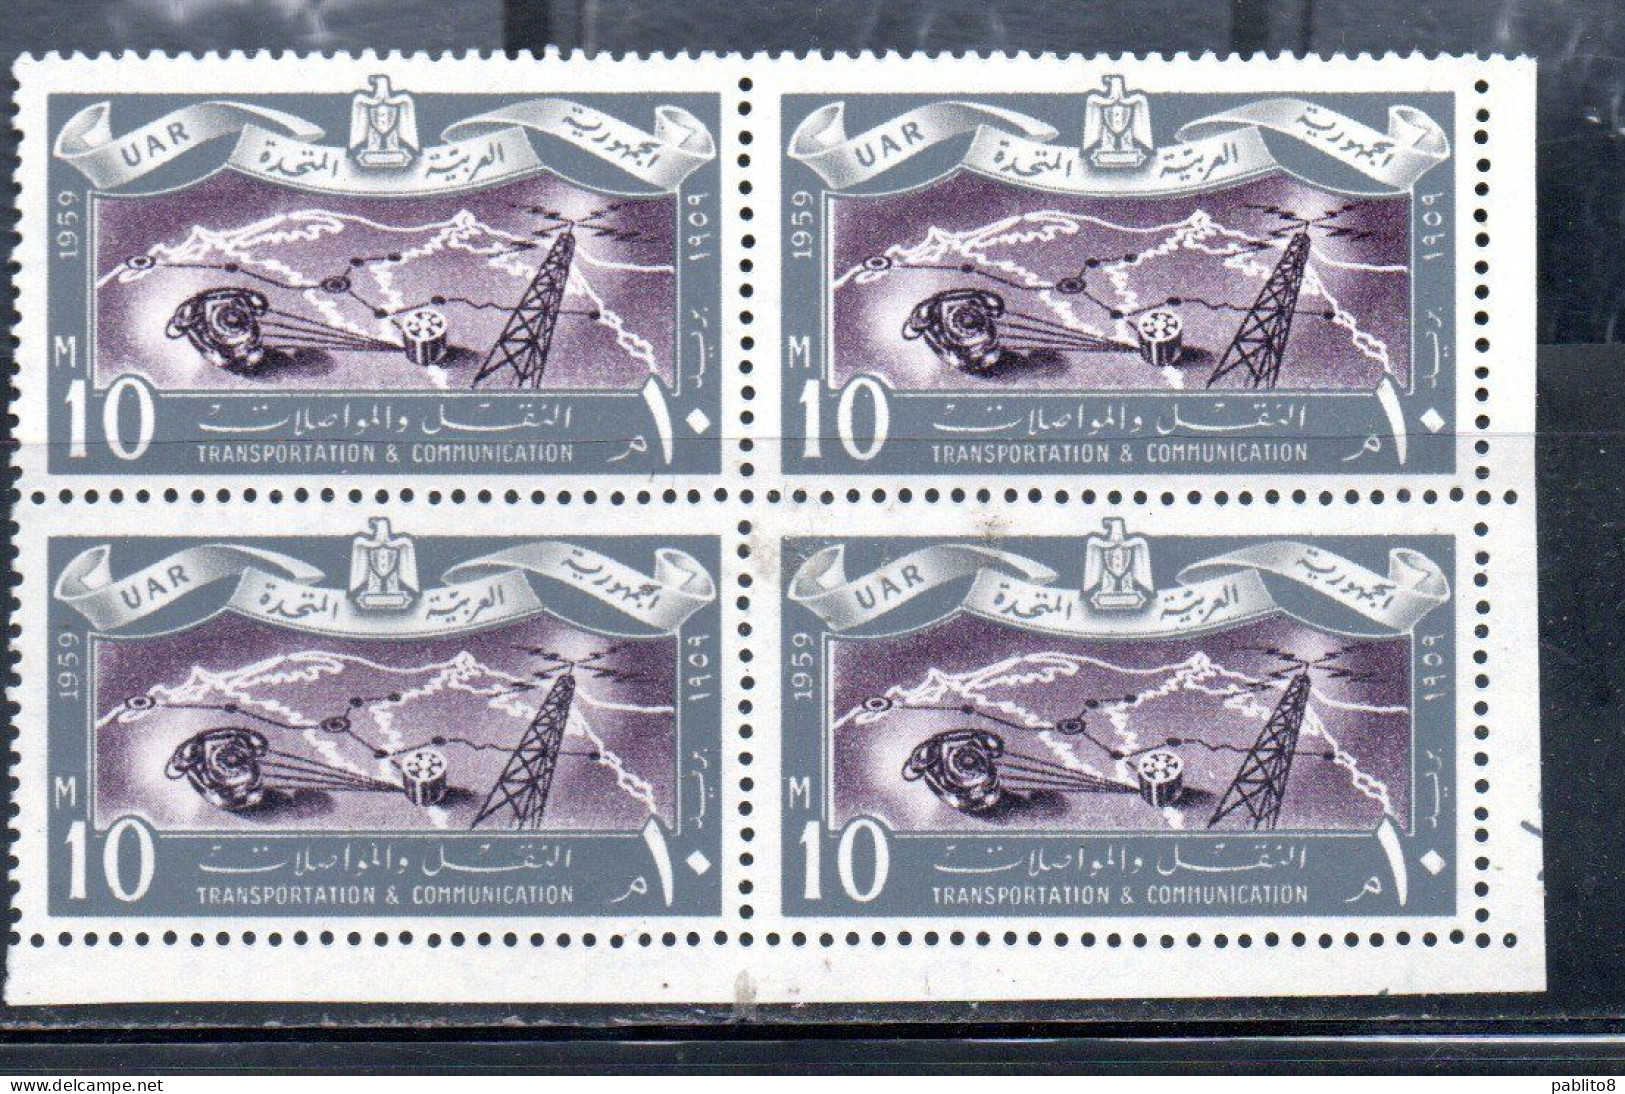 UAR EGYPT EGITTO 1959 TRANSPORTATION AND TELECOMMUNICATION TELECOMMUNICATIONS 10m  MNH - Unused Stamps